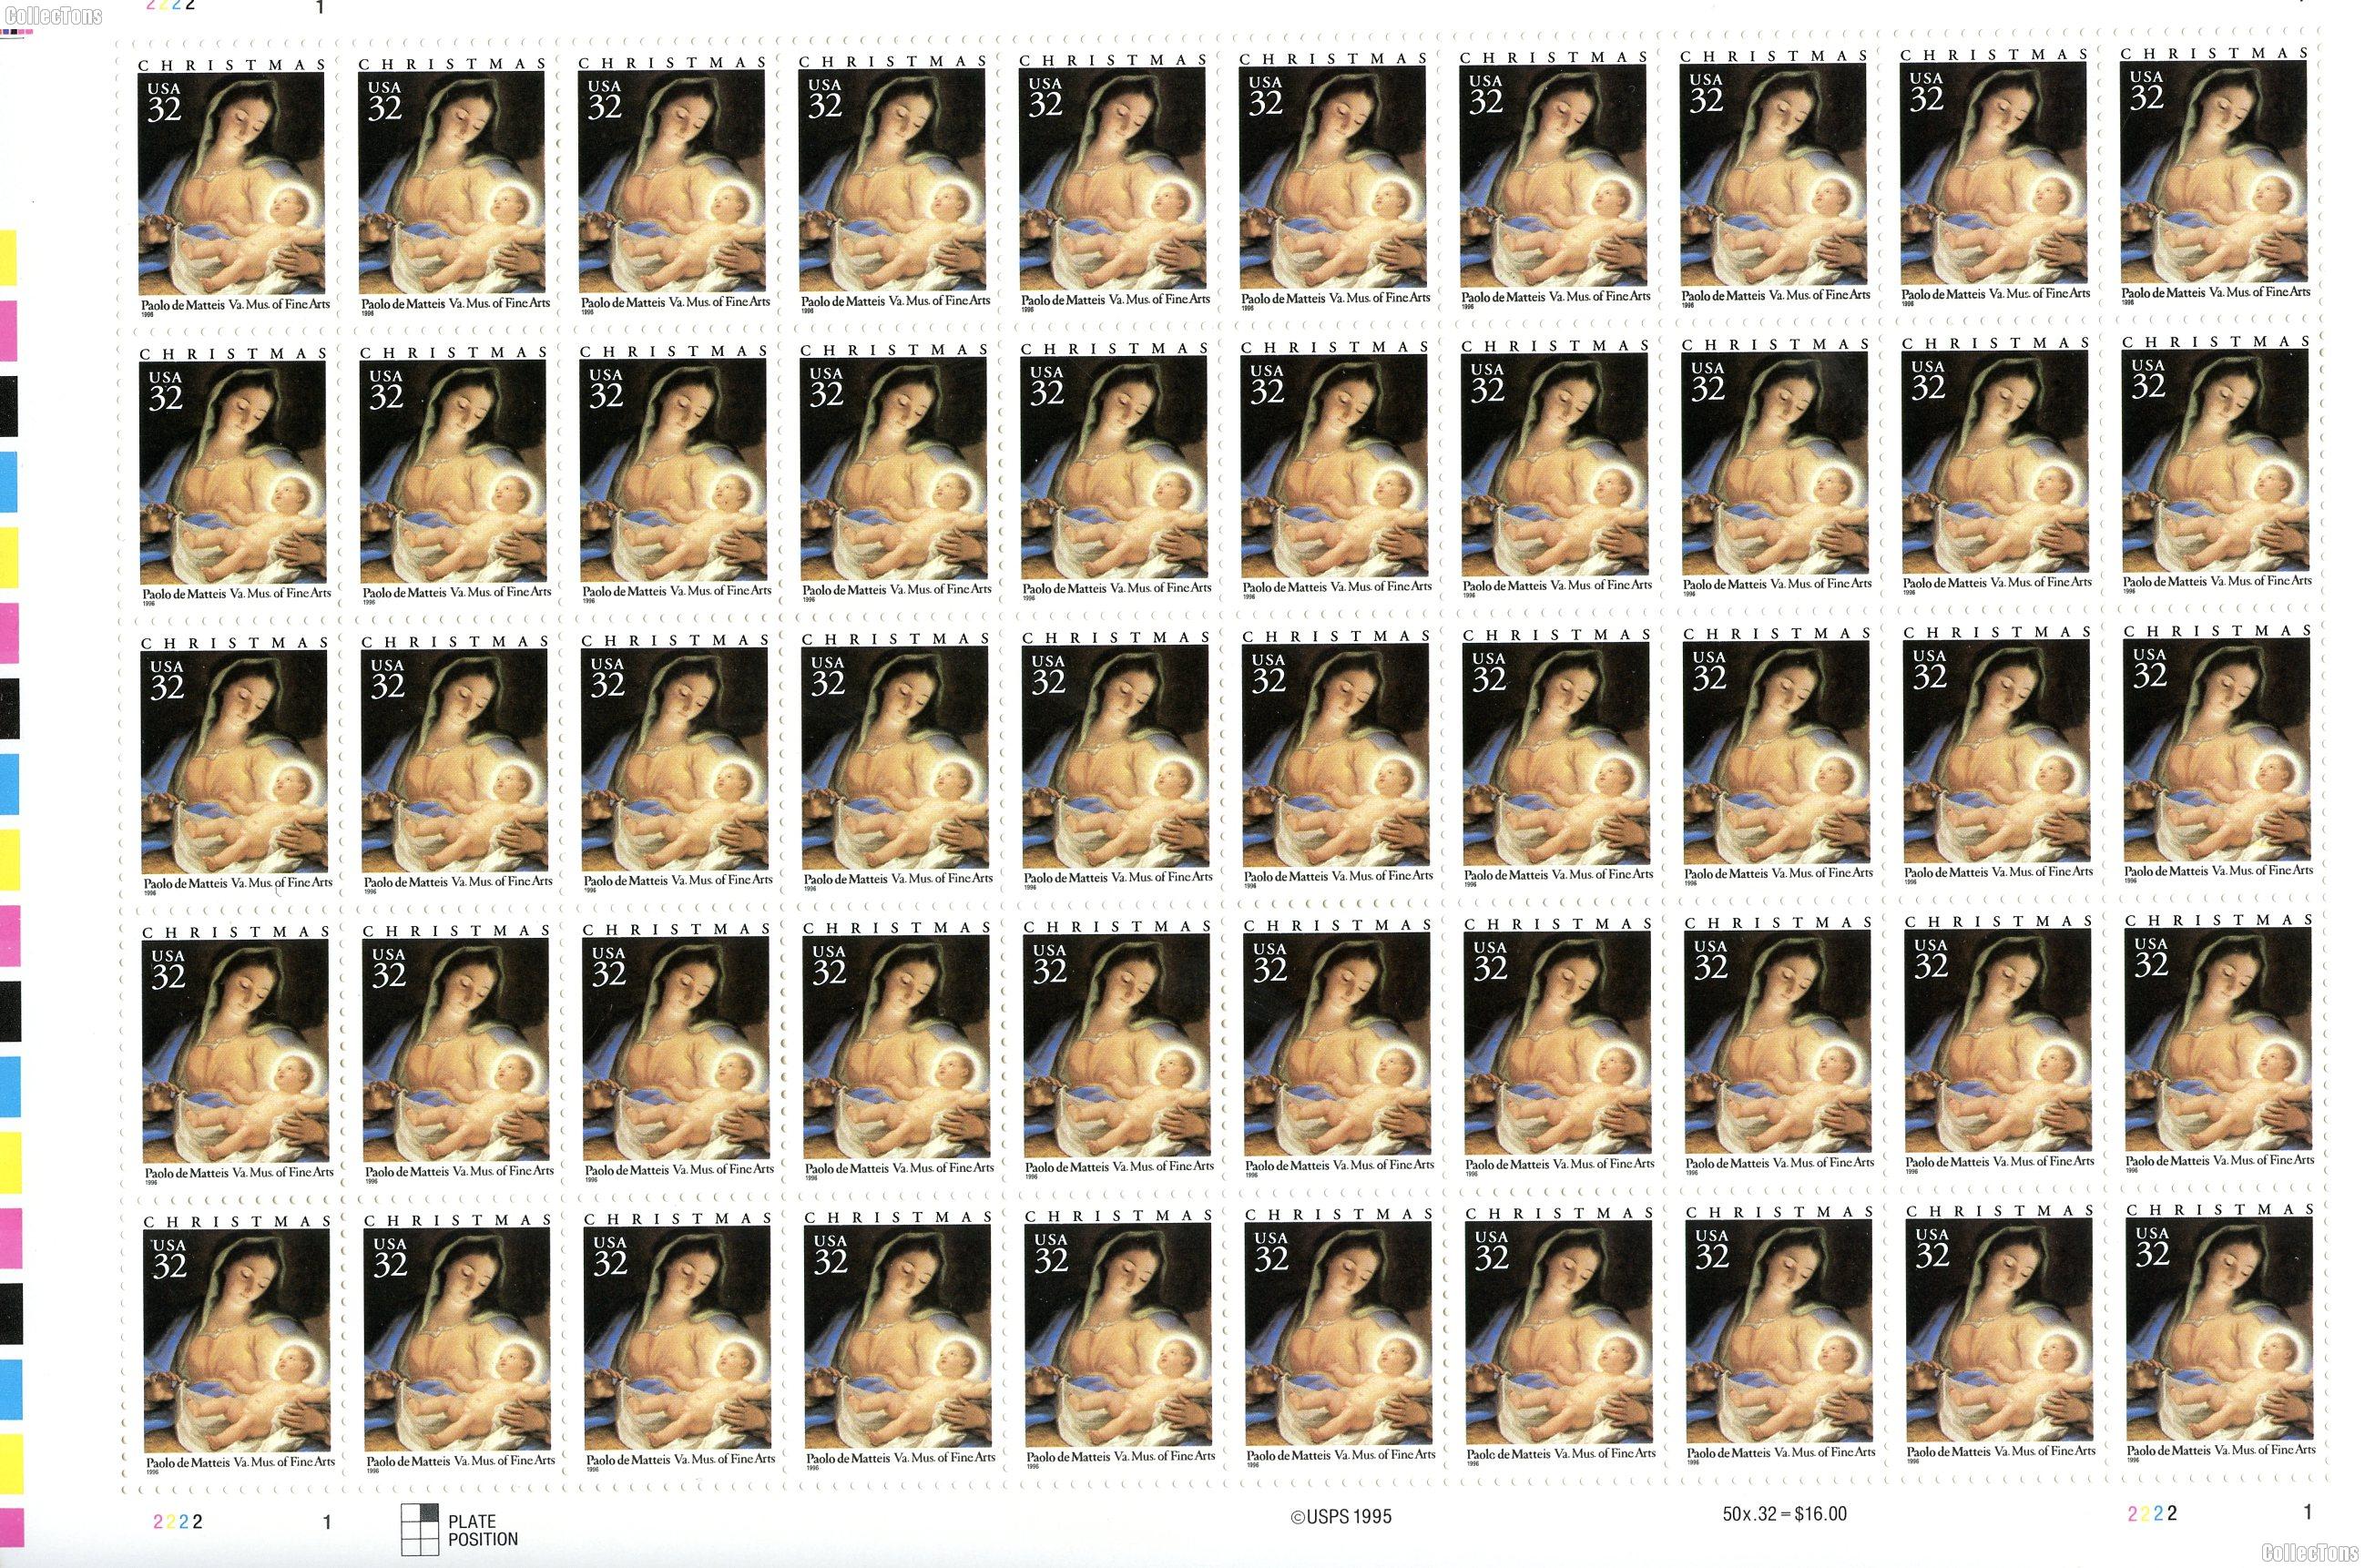 1996 Madonna & Child 32 Cent US Postage Stamp Unused Sheet of 50 Scott #3007